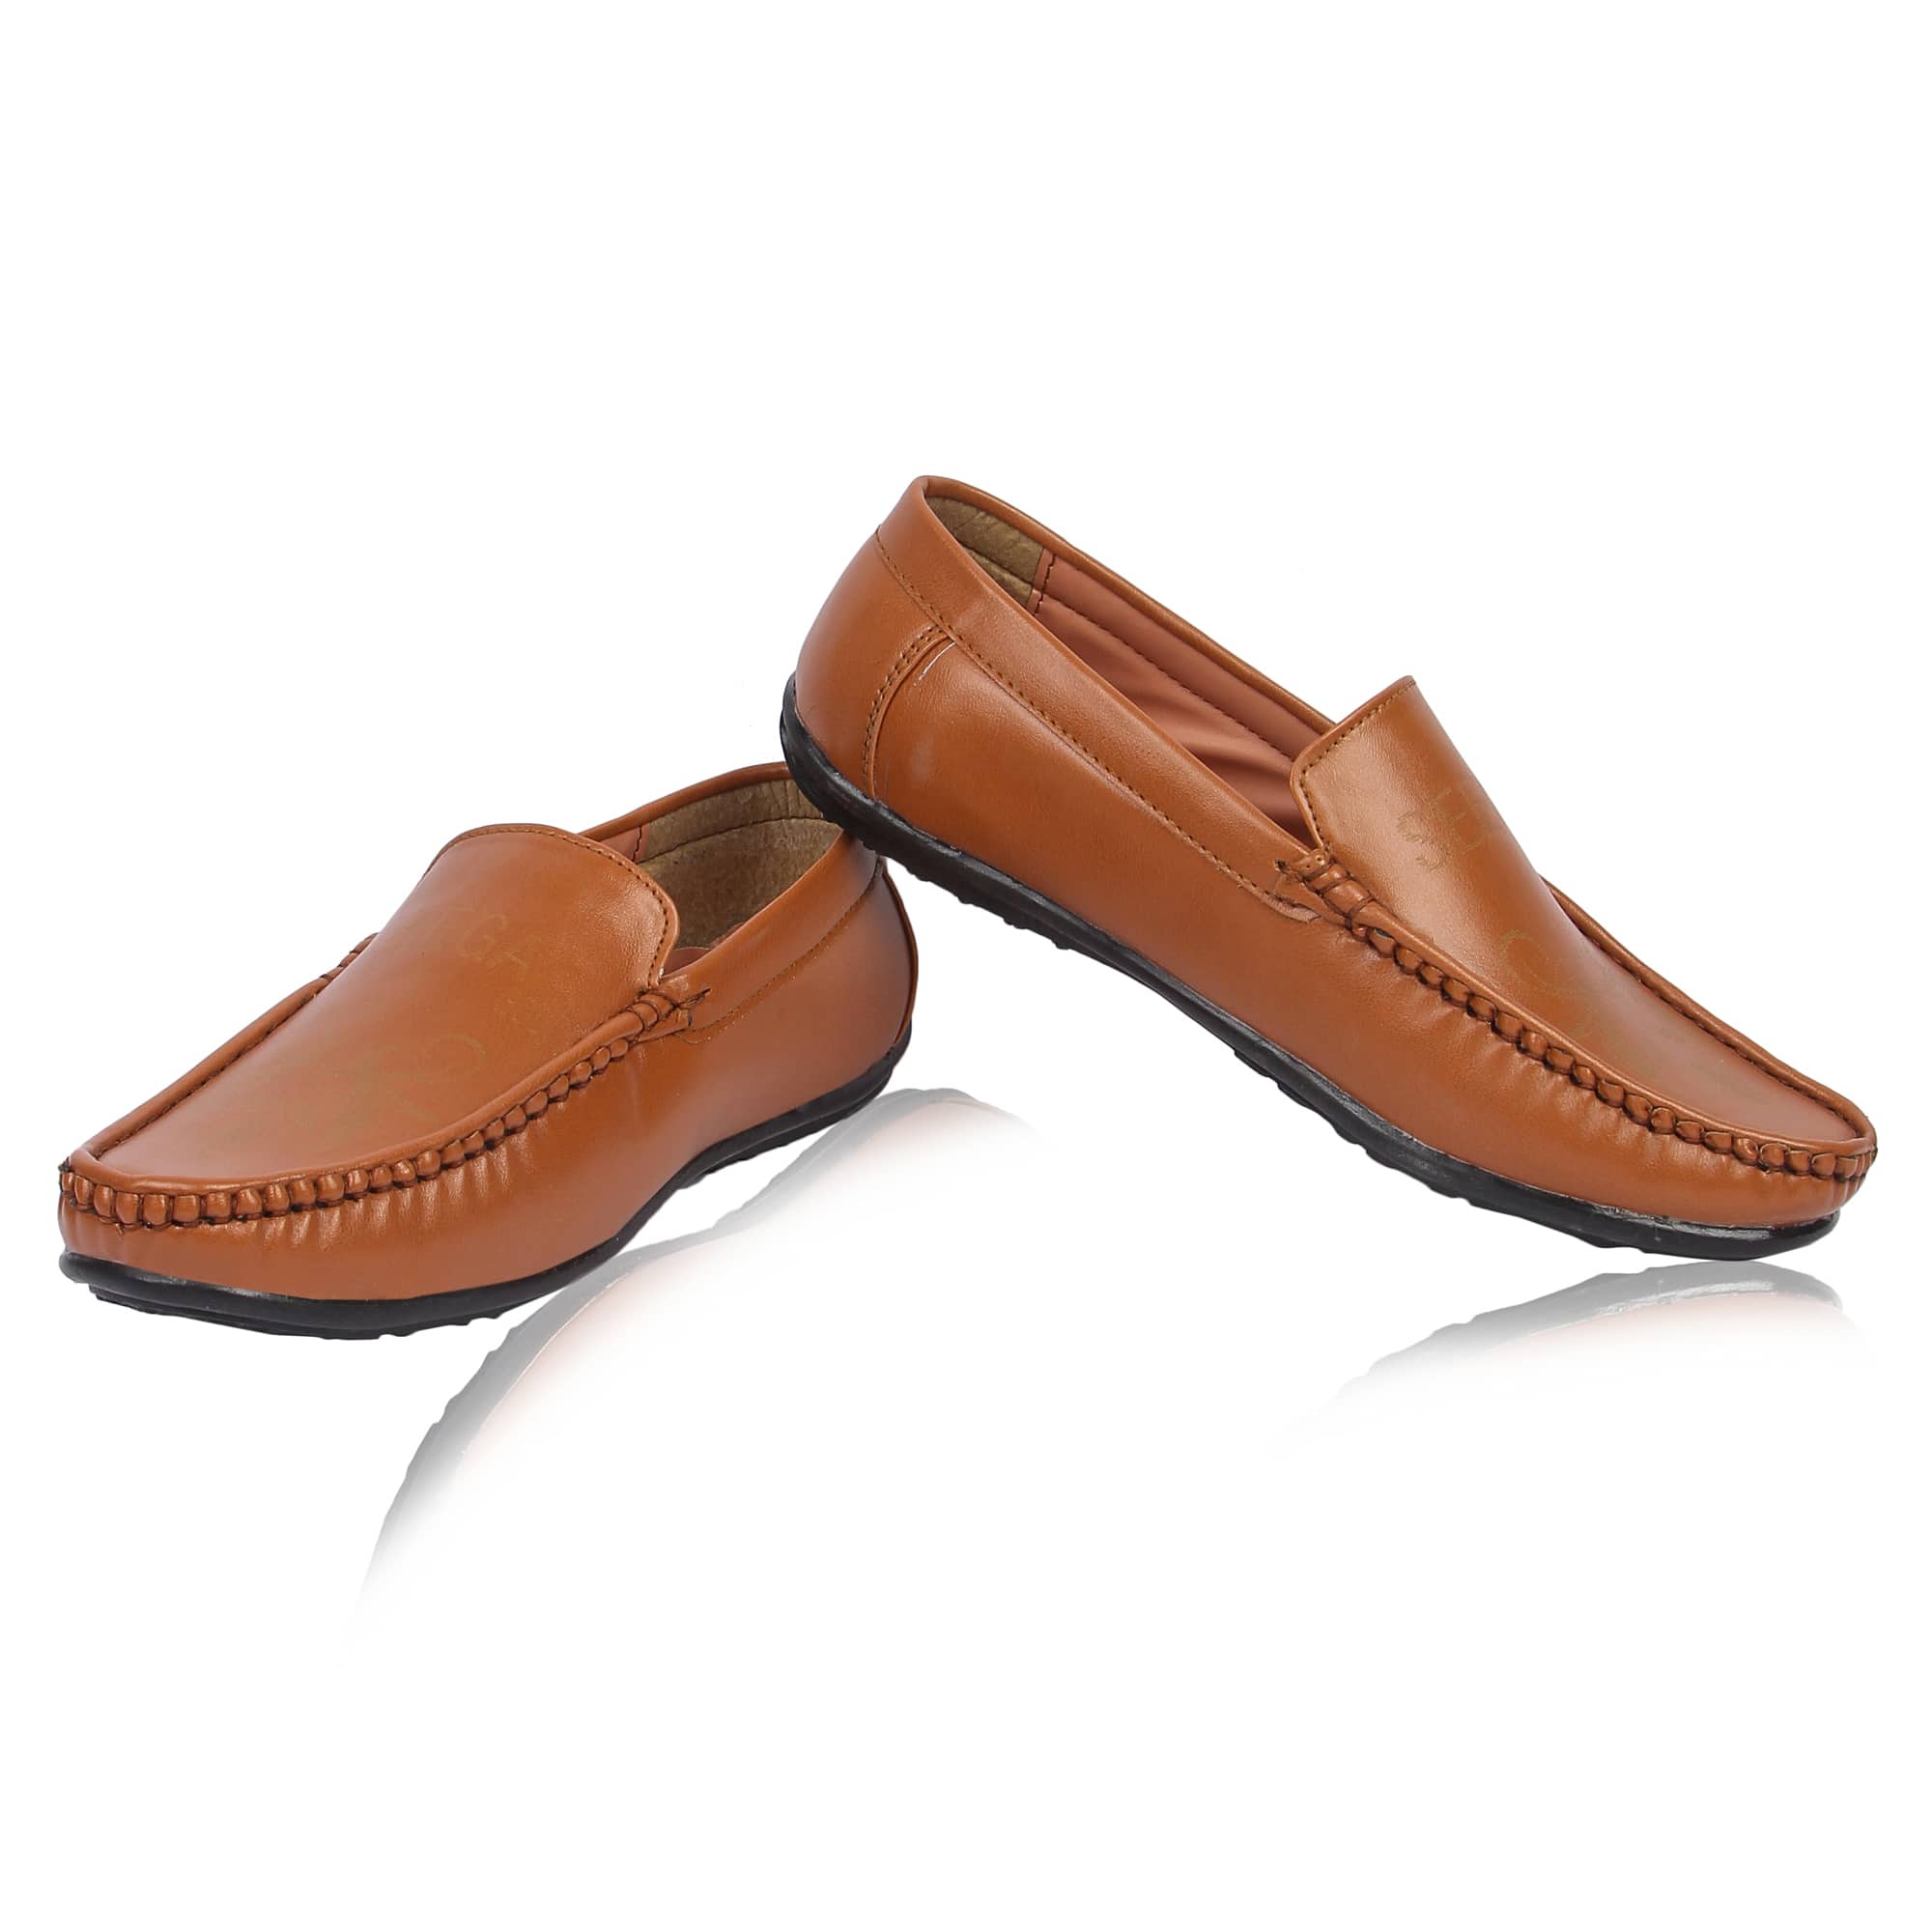 IMG_0132-min | Online Store for Men Footwear in India